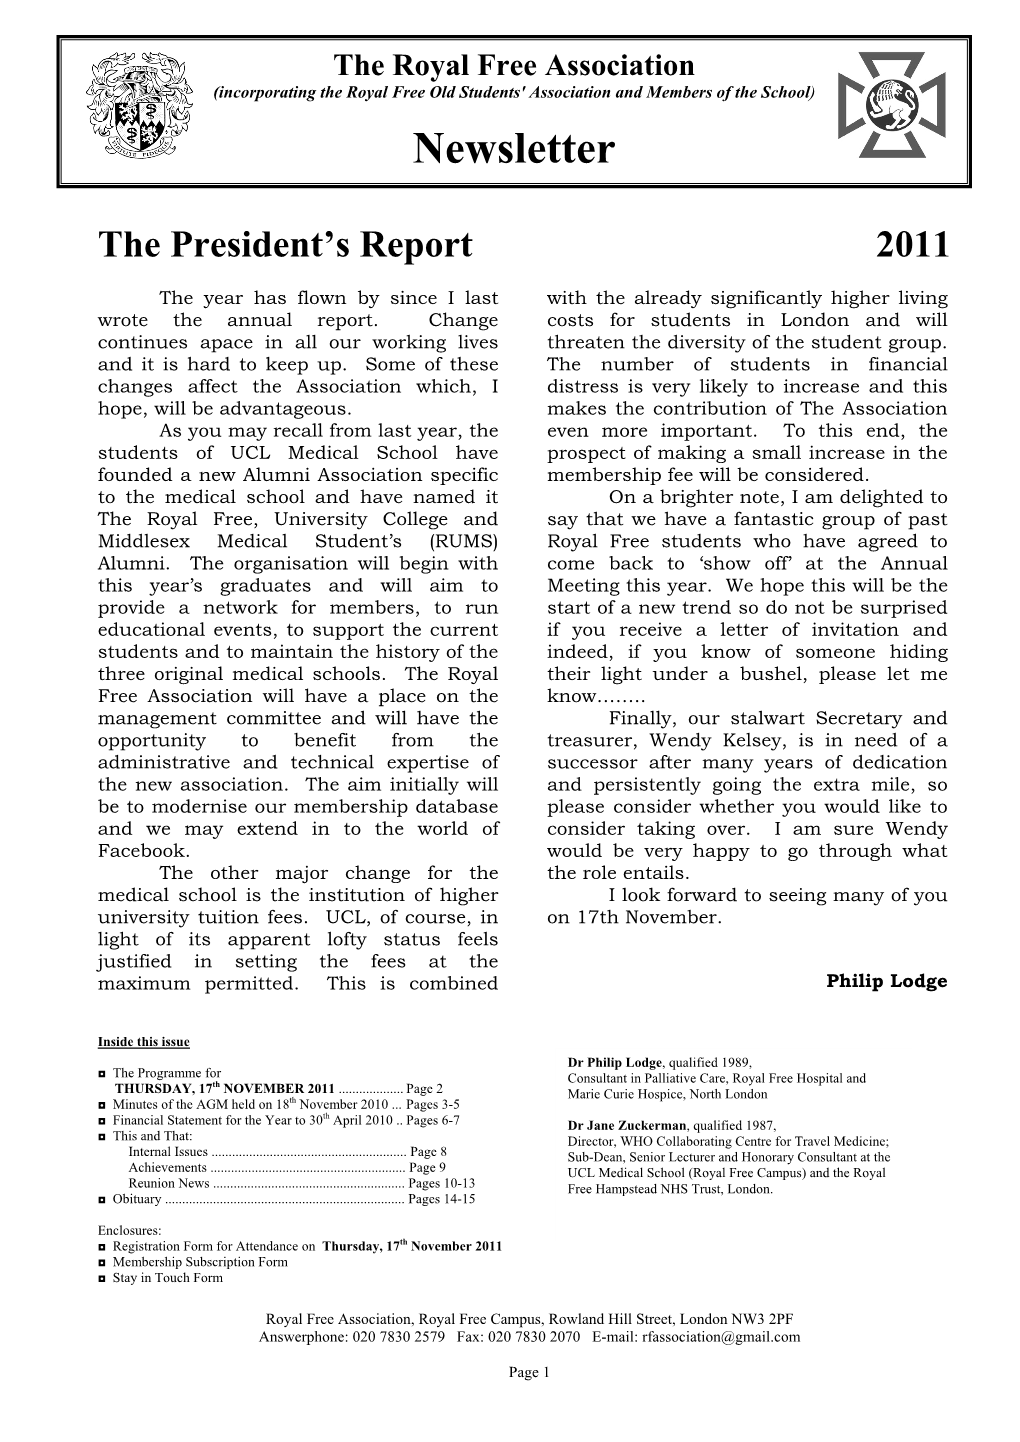 Royal Free Association Newsletter 2011